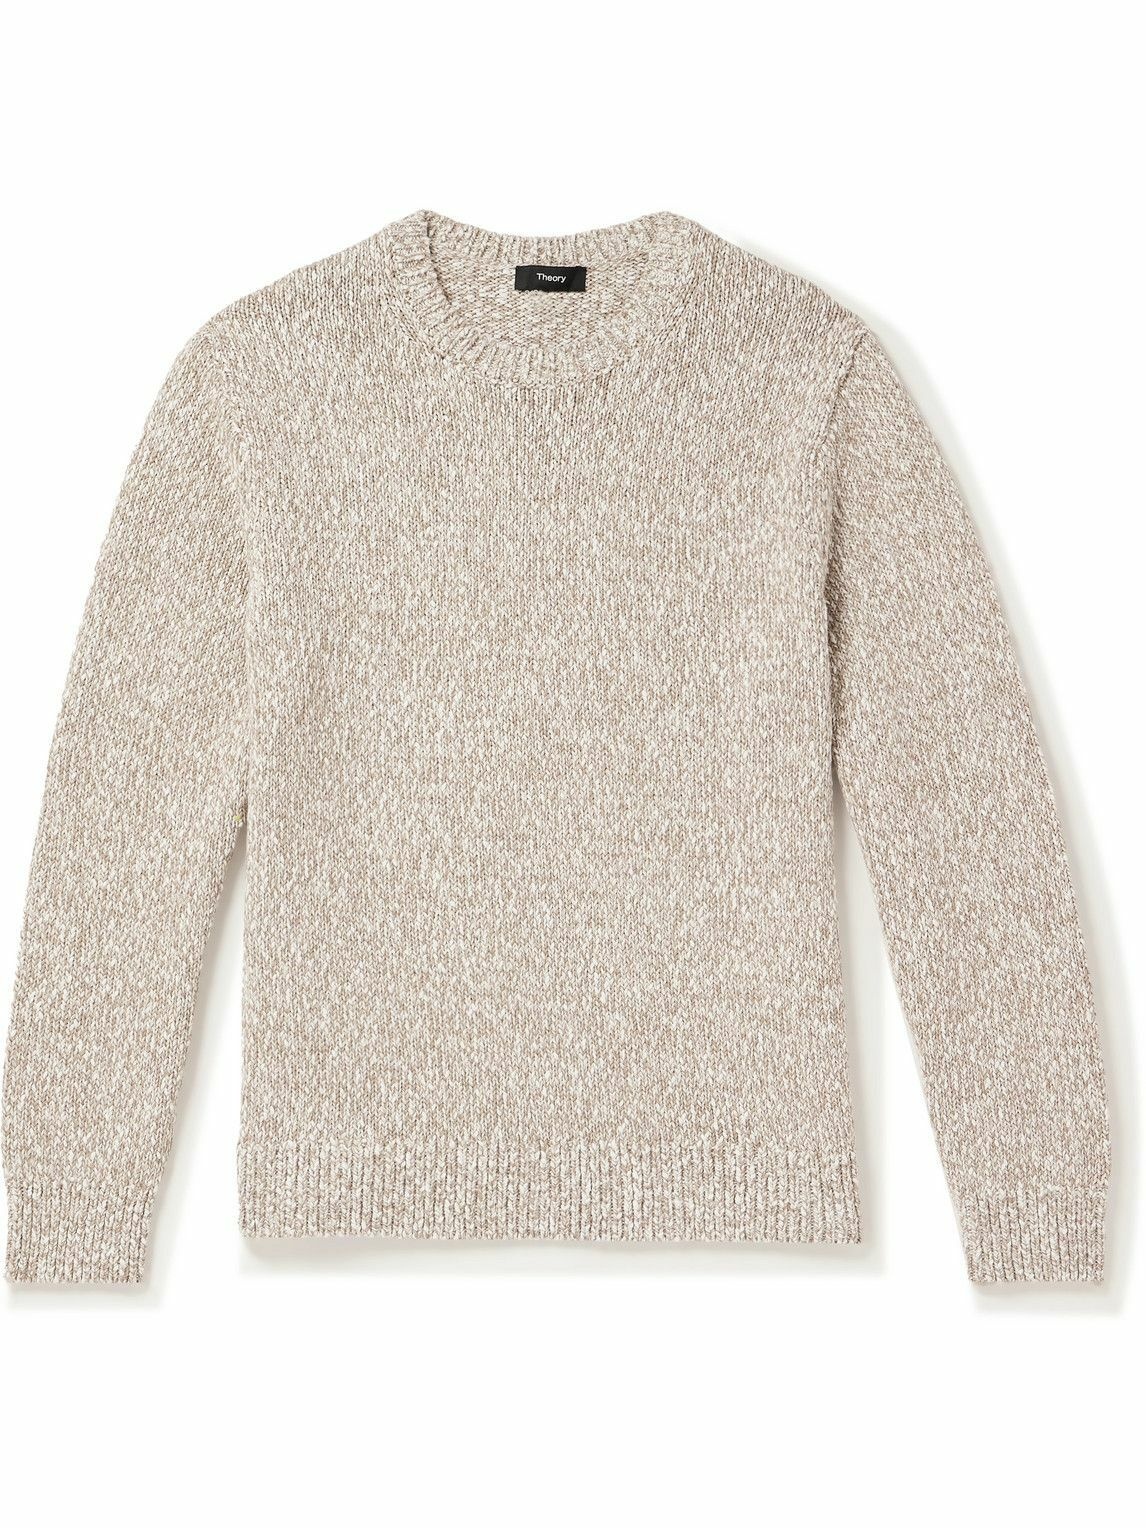 Photo: Theory - Mauno Organic Cotton Sweater - Neutrals